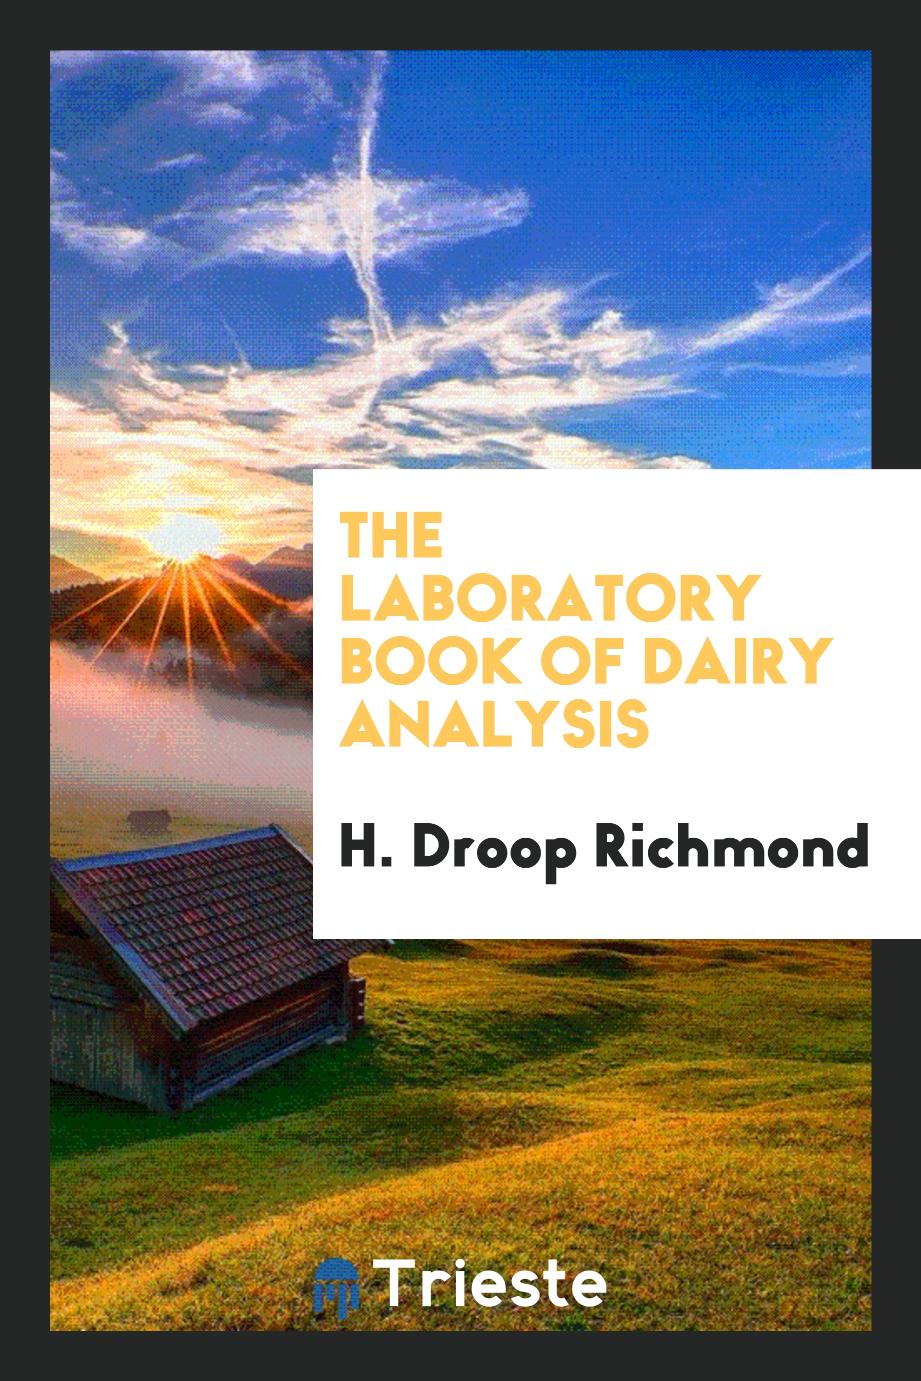 The Laboratory Book of Dairy Analysis